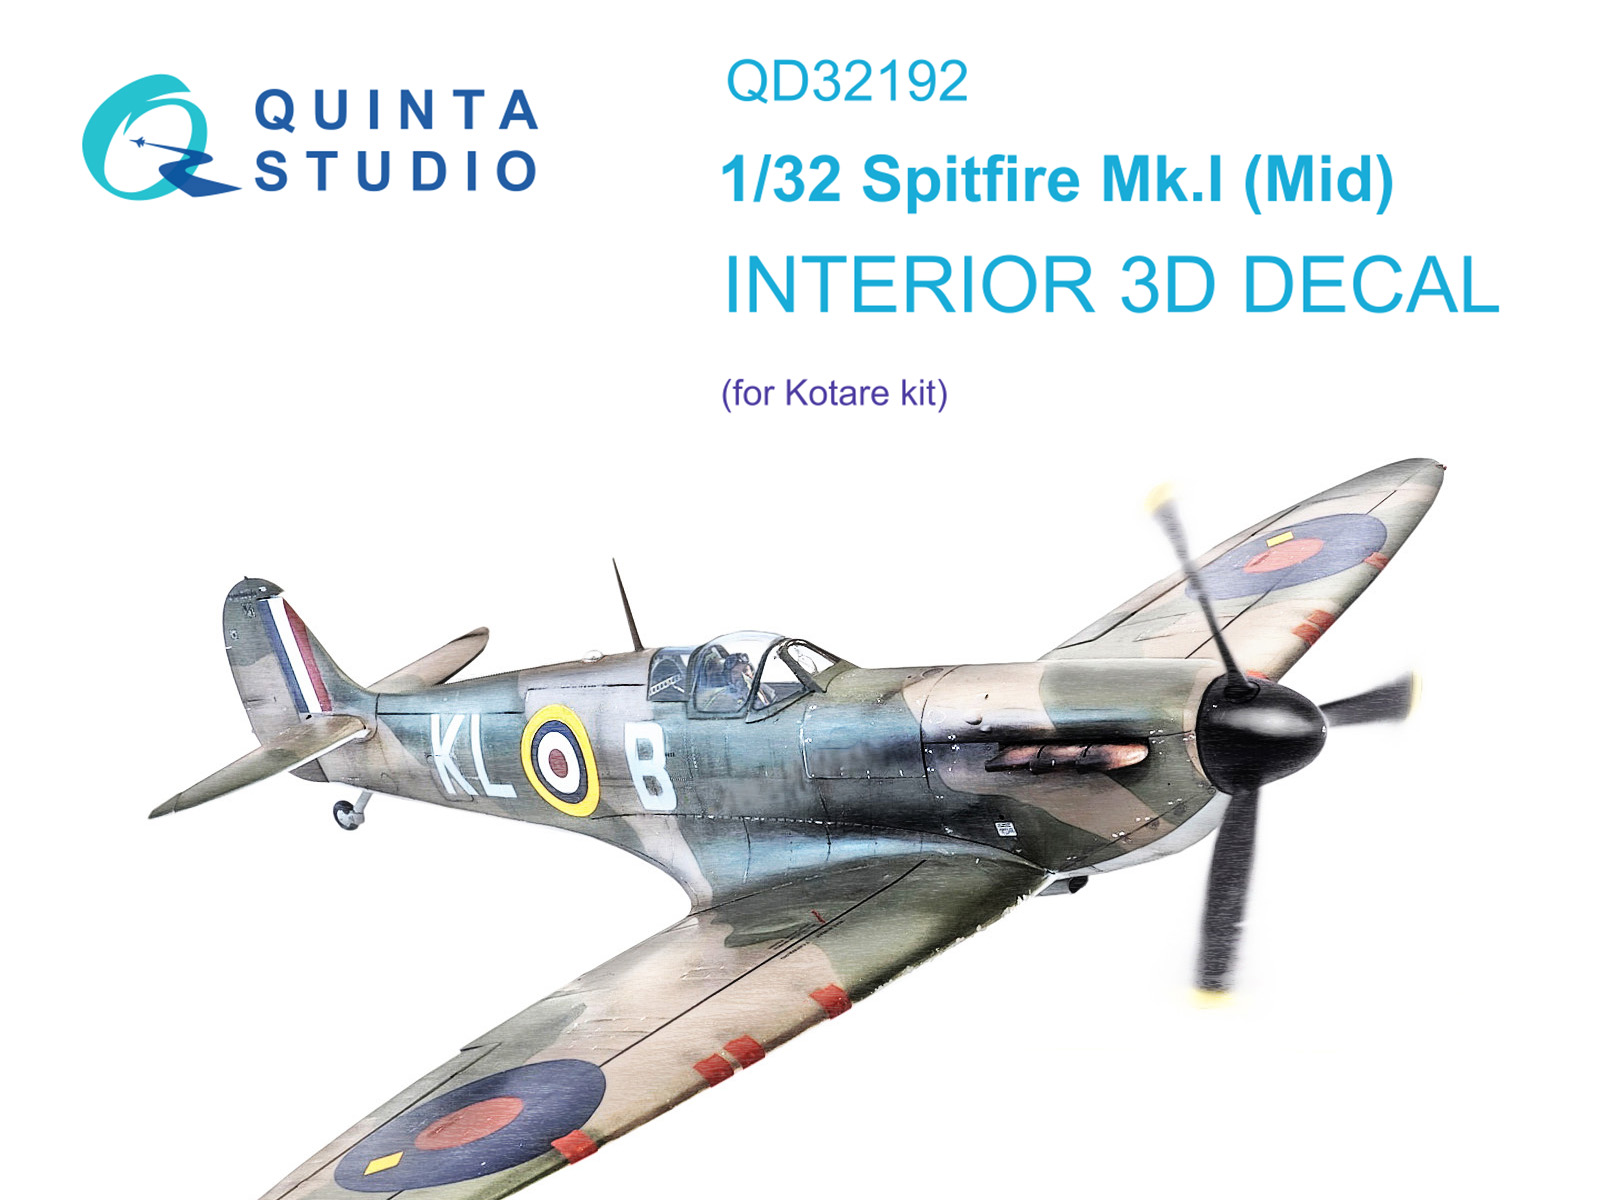 3D Декаль интерьера Quinta Studio 1/32 кабины Spitfire Mk 1 Mid Kotare QD32192